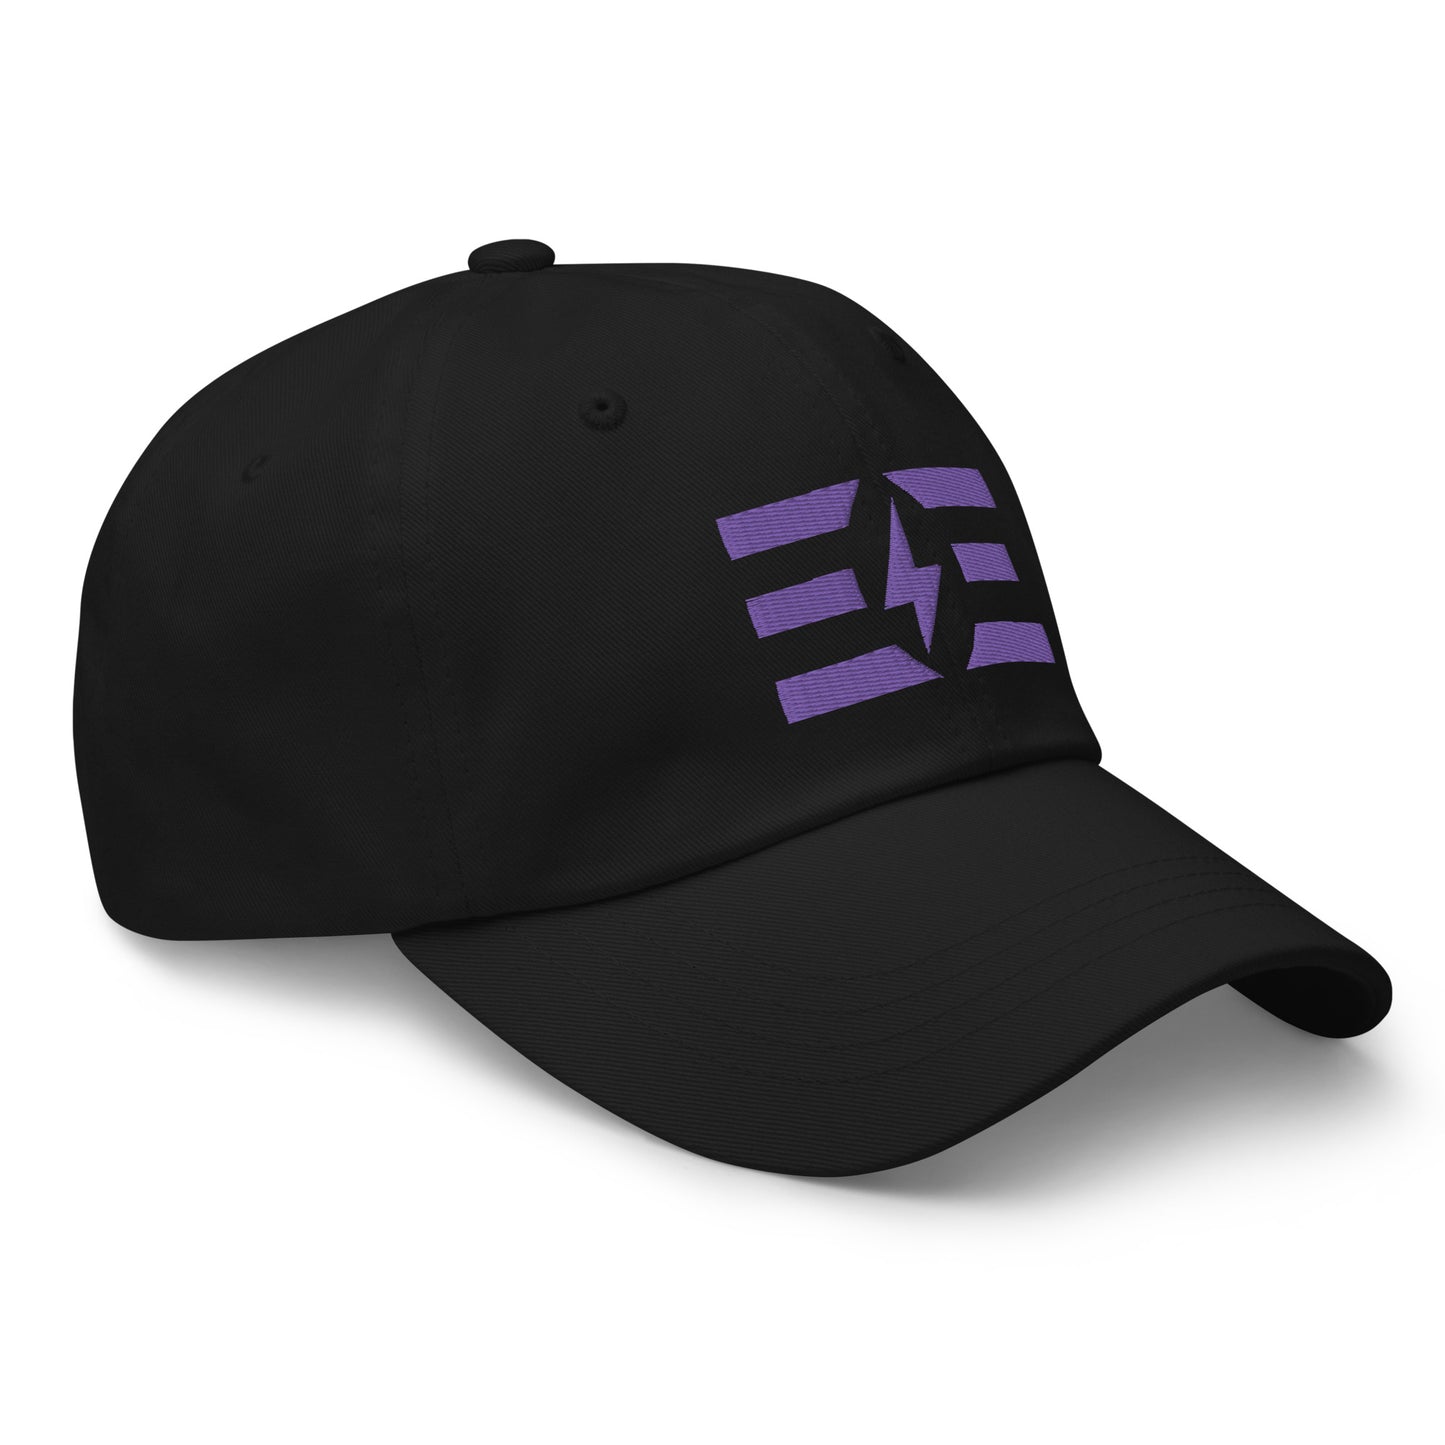 Endurance eSports Dad hat - Purple